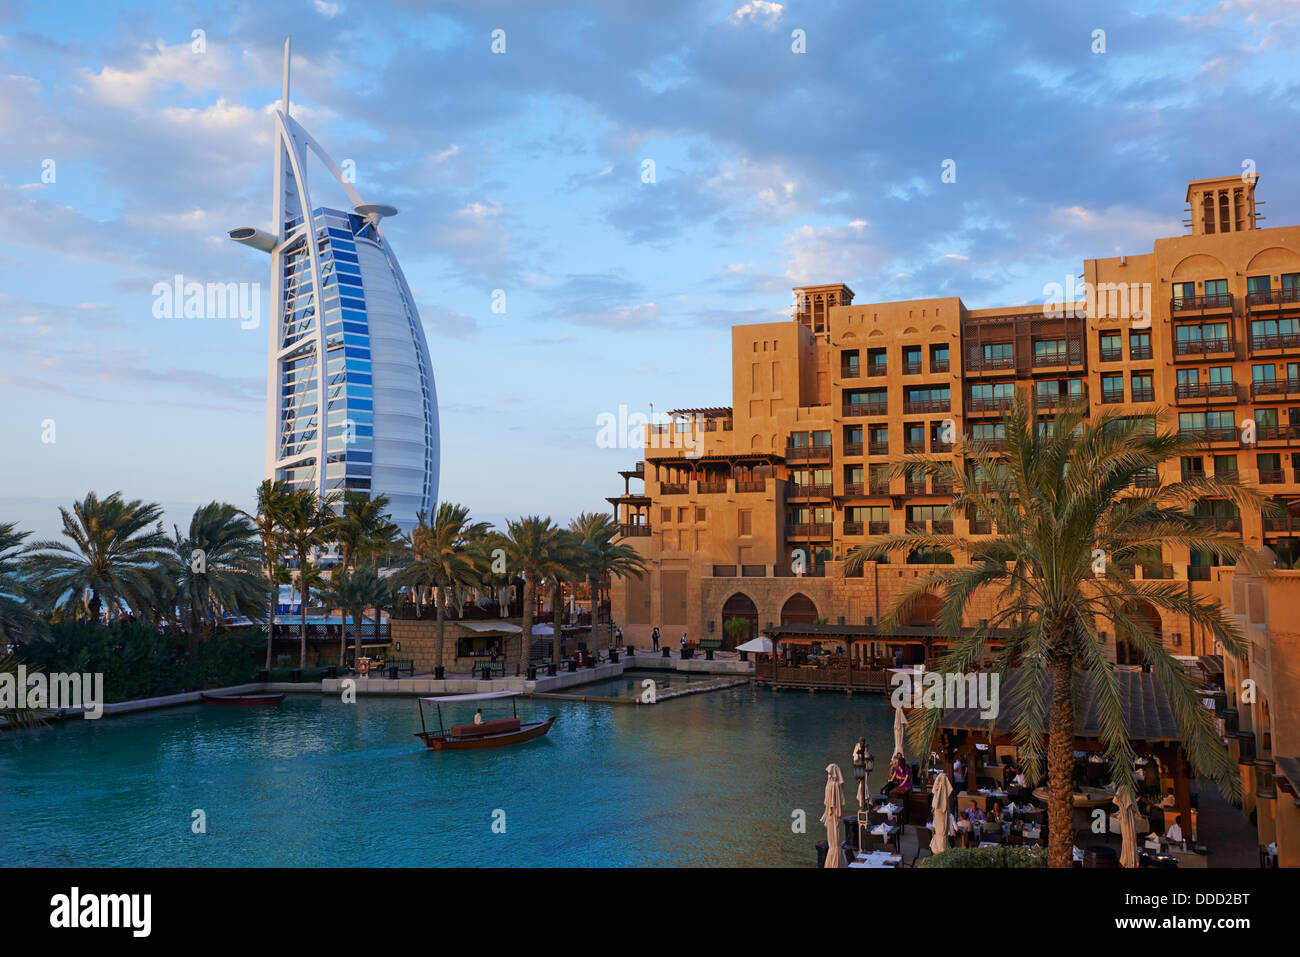 Vereinigte Arabische Emirate, Dubai, Jumeirah Beach, Hotel Mina A'Salam Madinat Jumeirah mit Ansicht des Burj Al Arab hotel Stockfoto